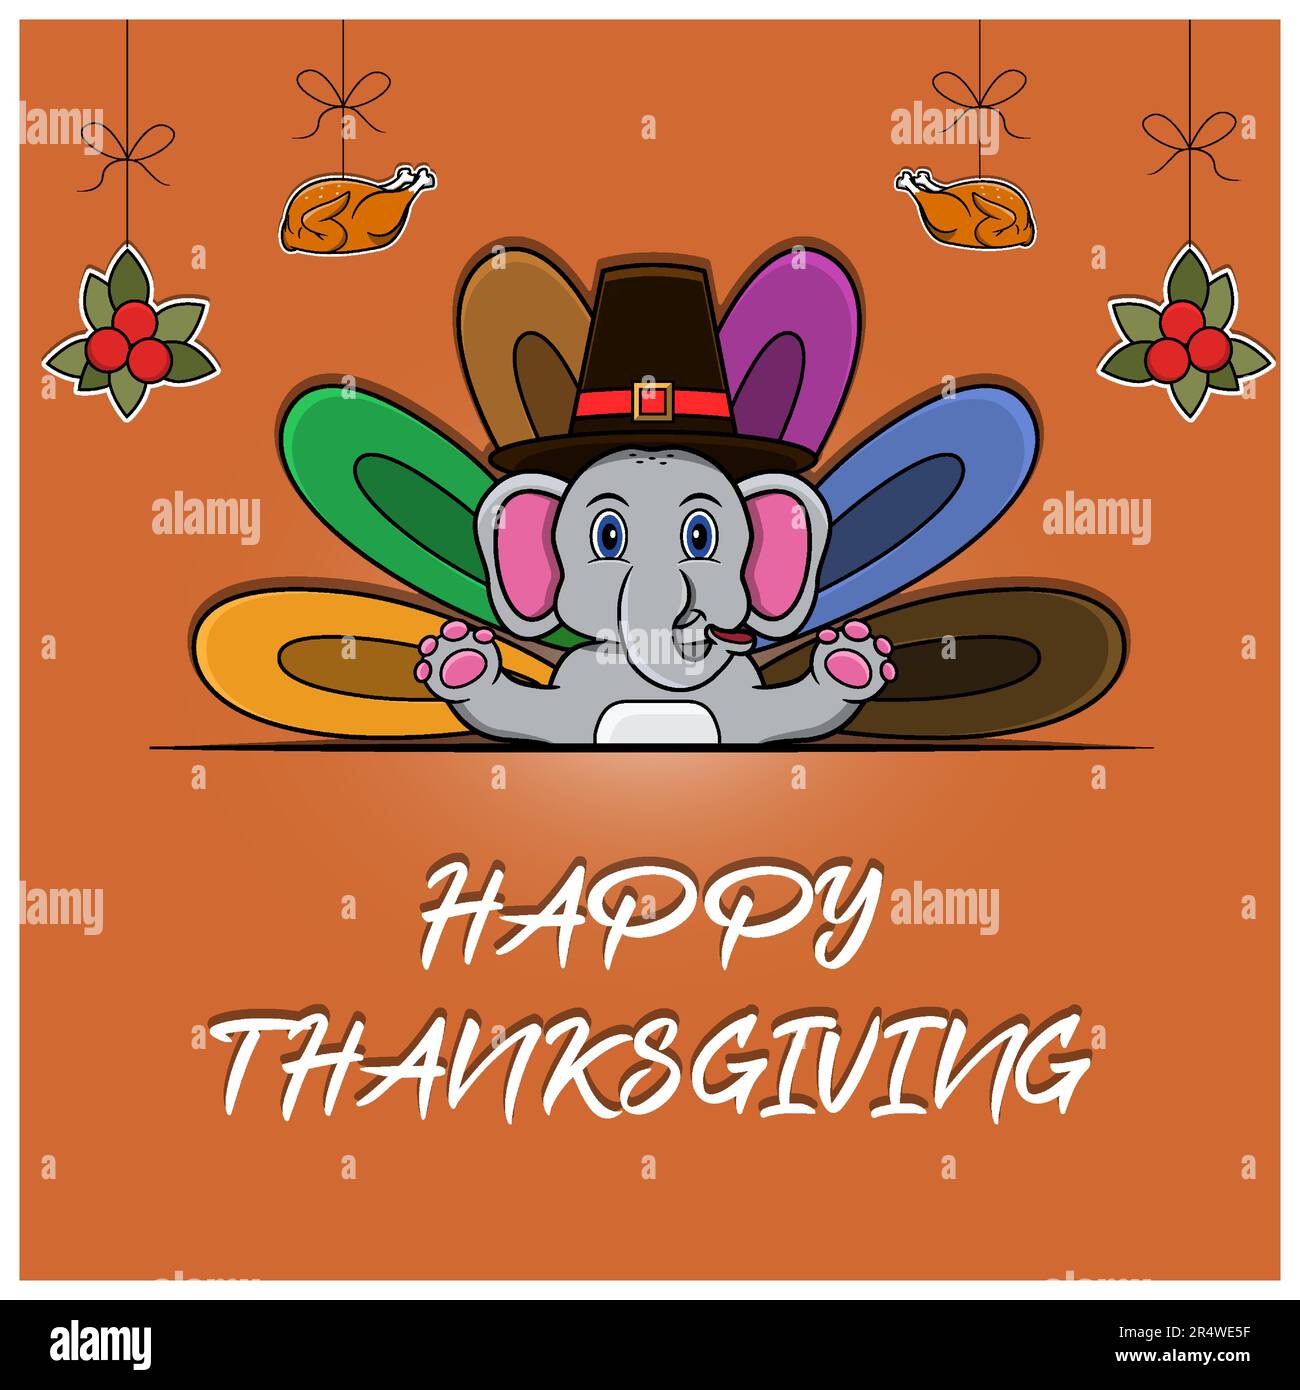 Tarjeta de felicitación de Acción de Gracias feliz, cartel o volante de diseño de celebración con carácter de elefante. Vector e ilustración. Ilustración del Vector